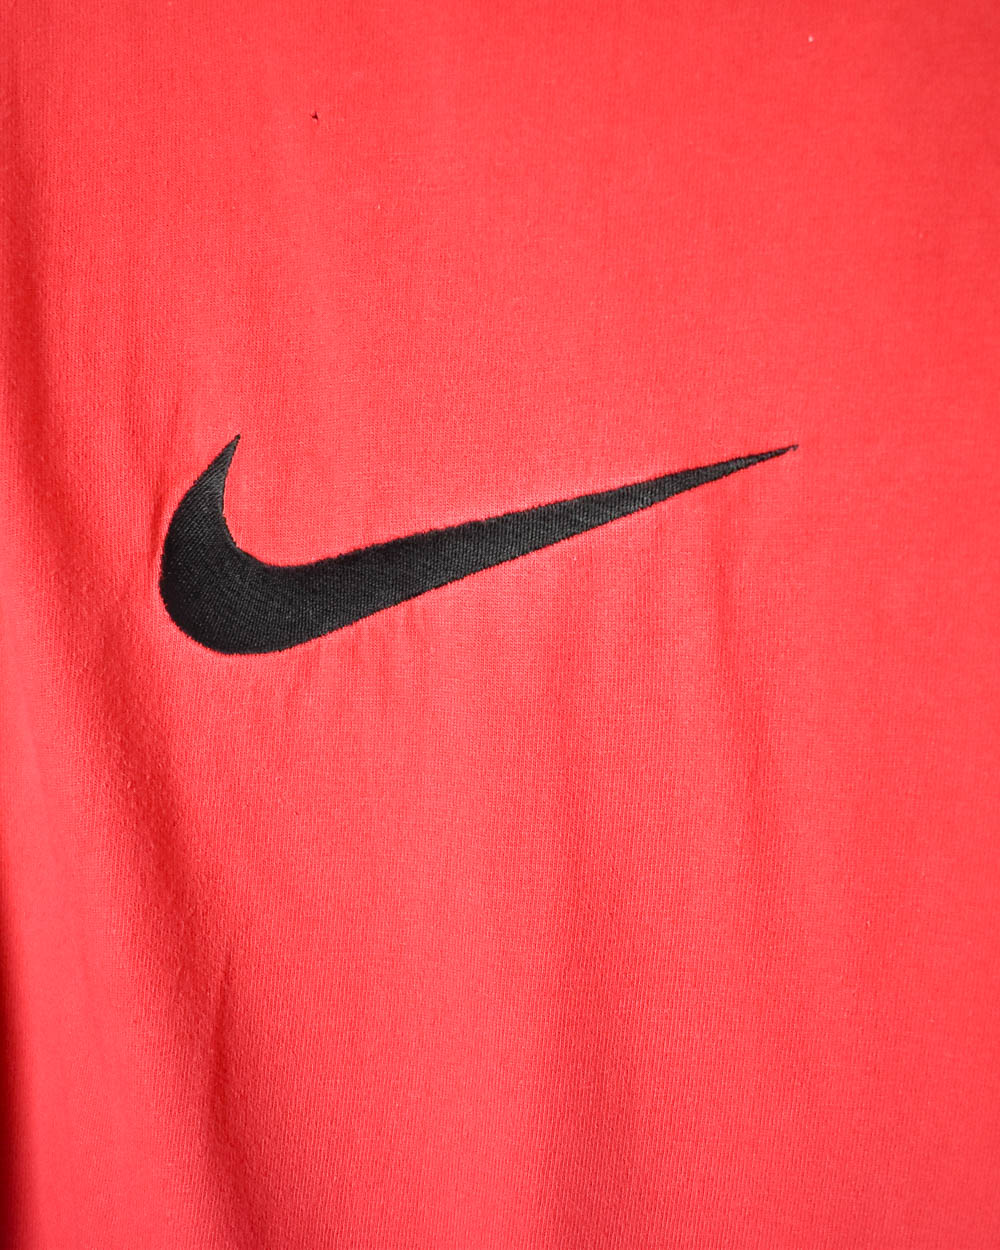 Red Nike Premier T-Shirt - Medium